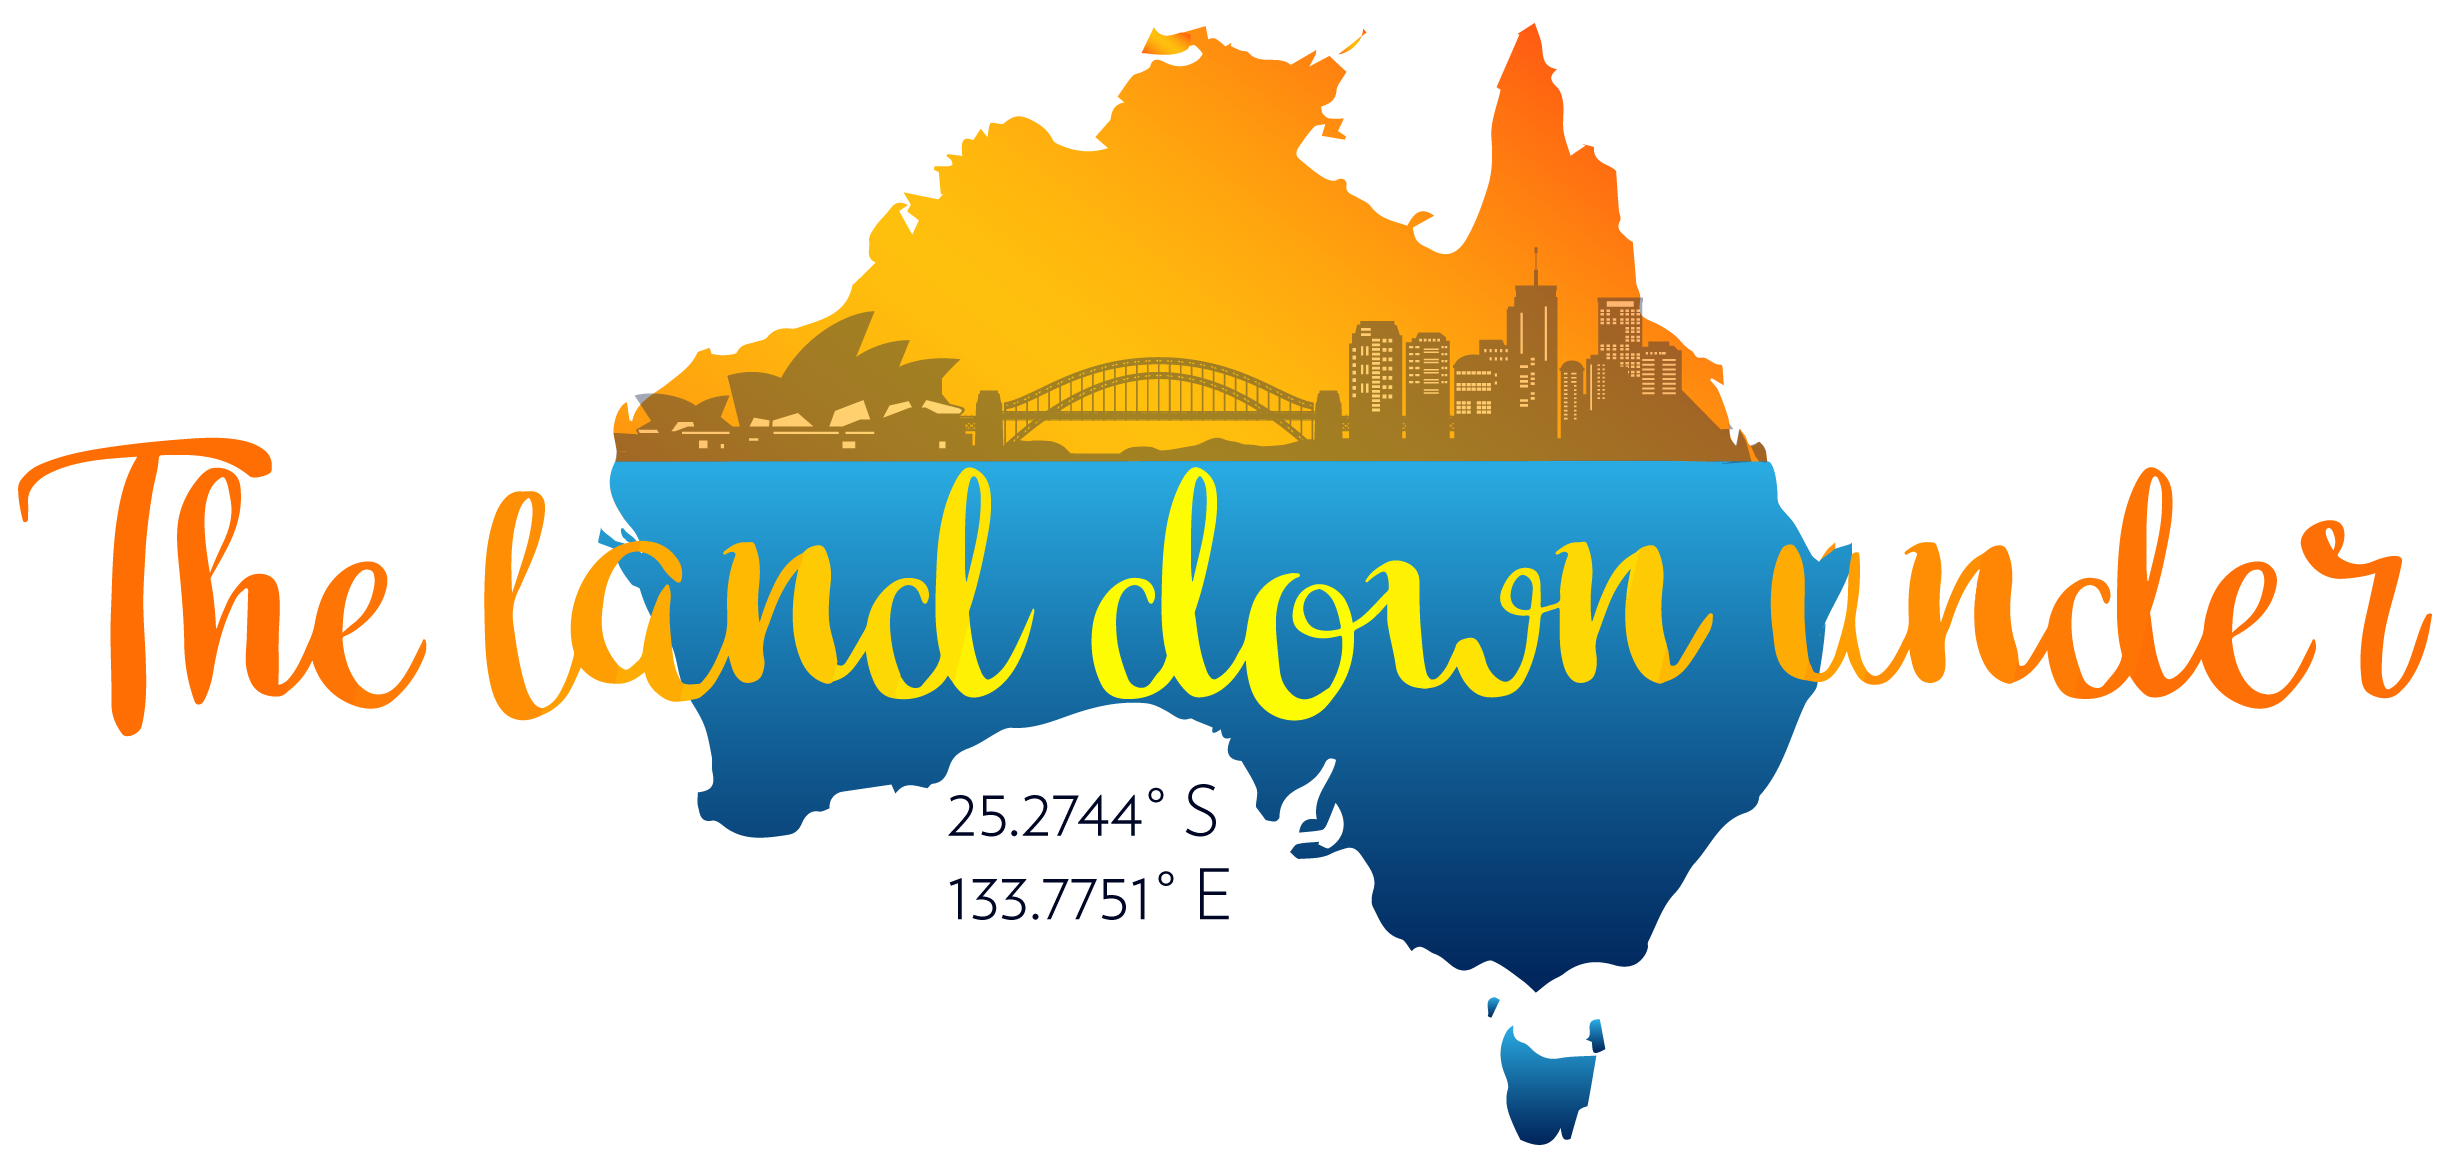 The Land Down Under Logo